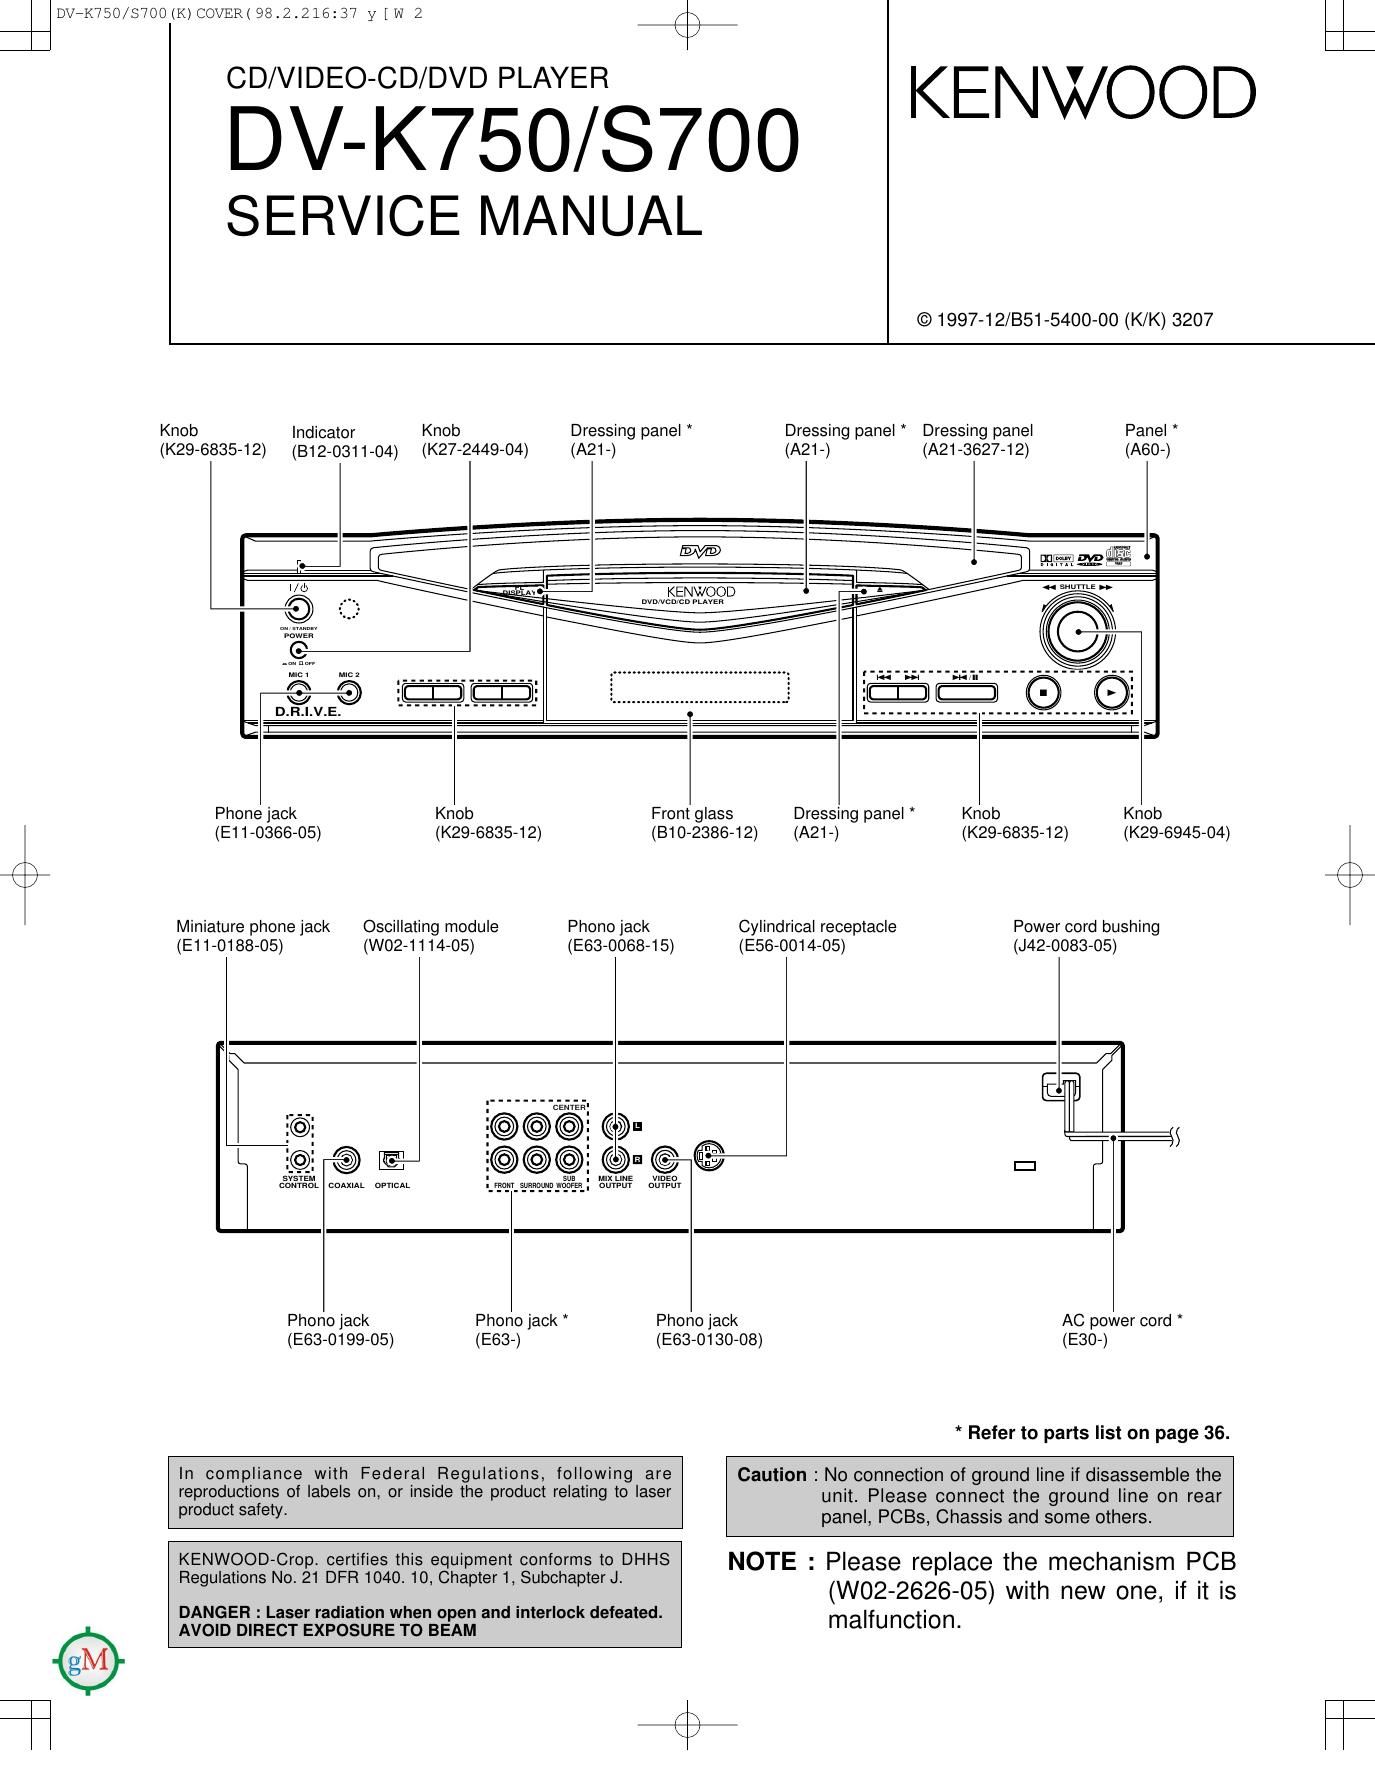 Kenwood DVS 700 Service Manual